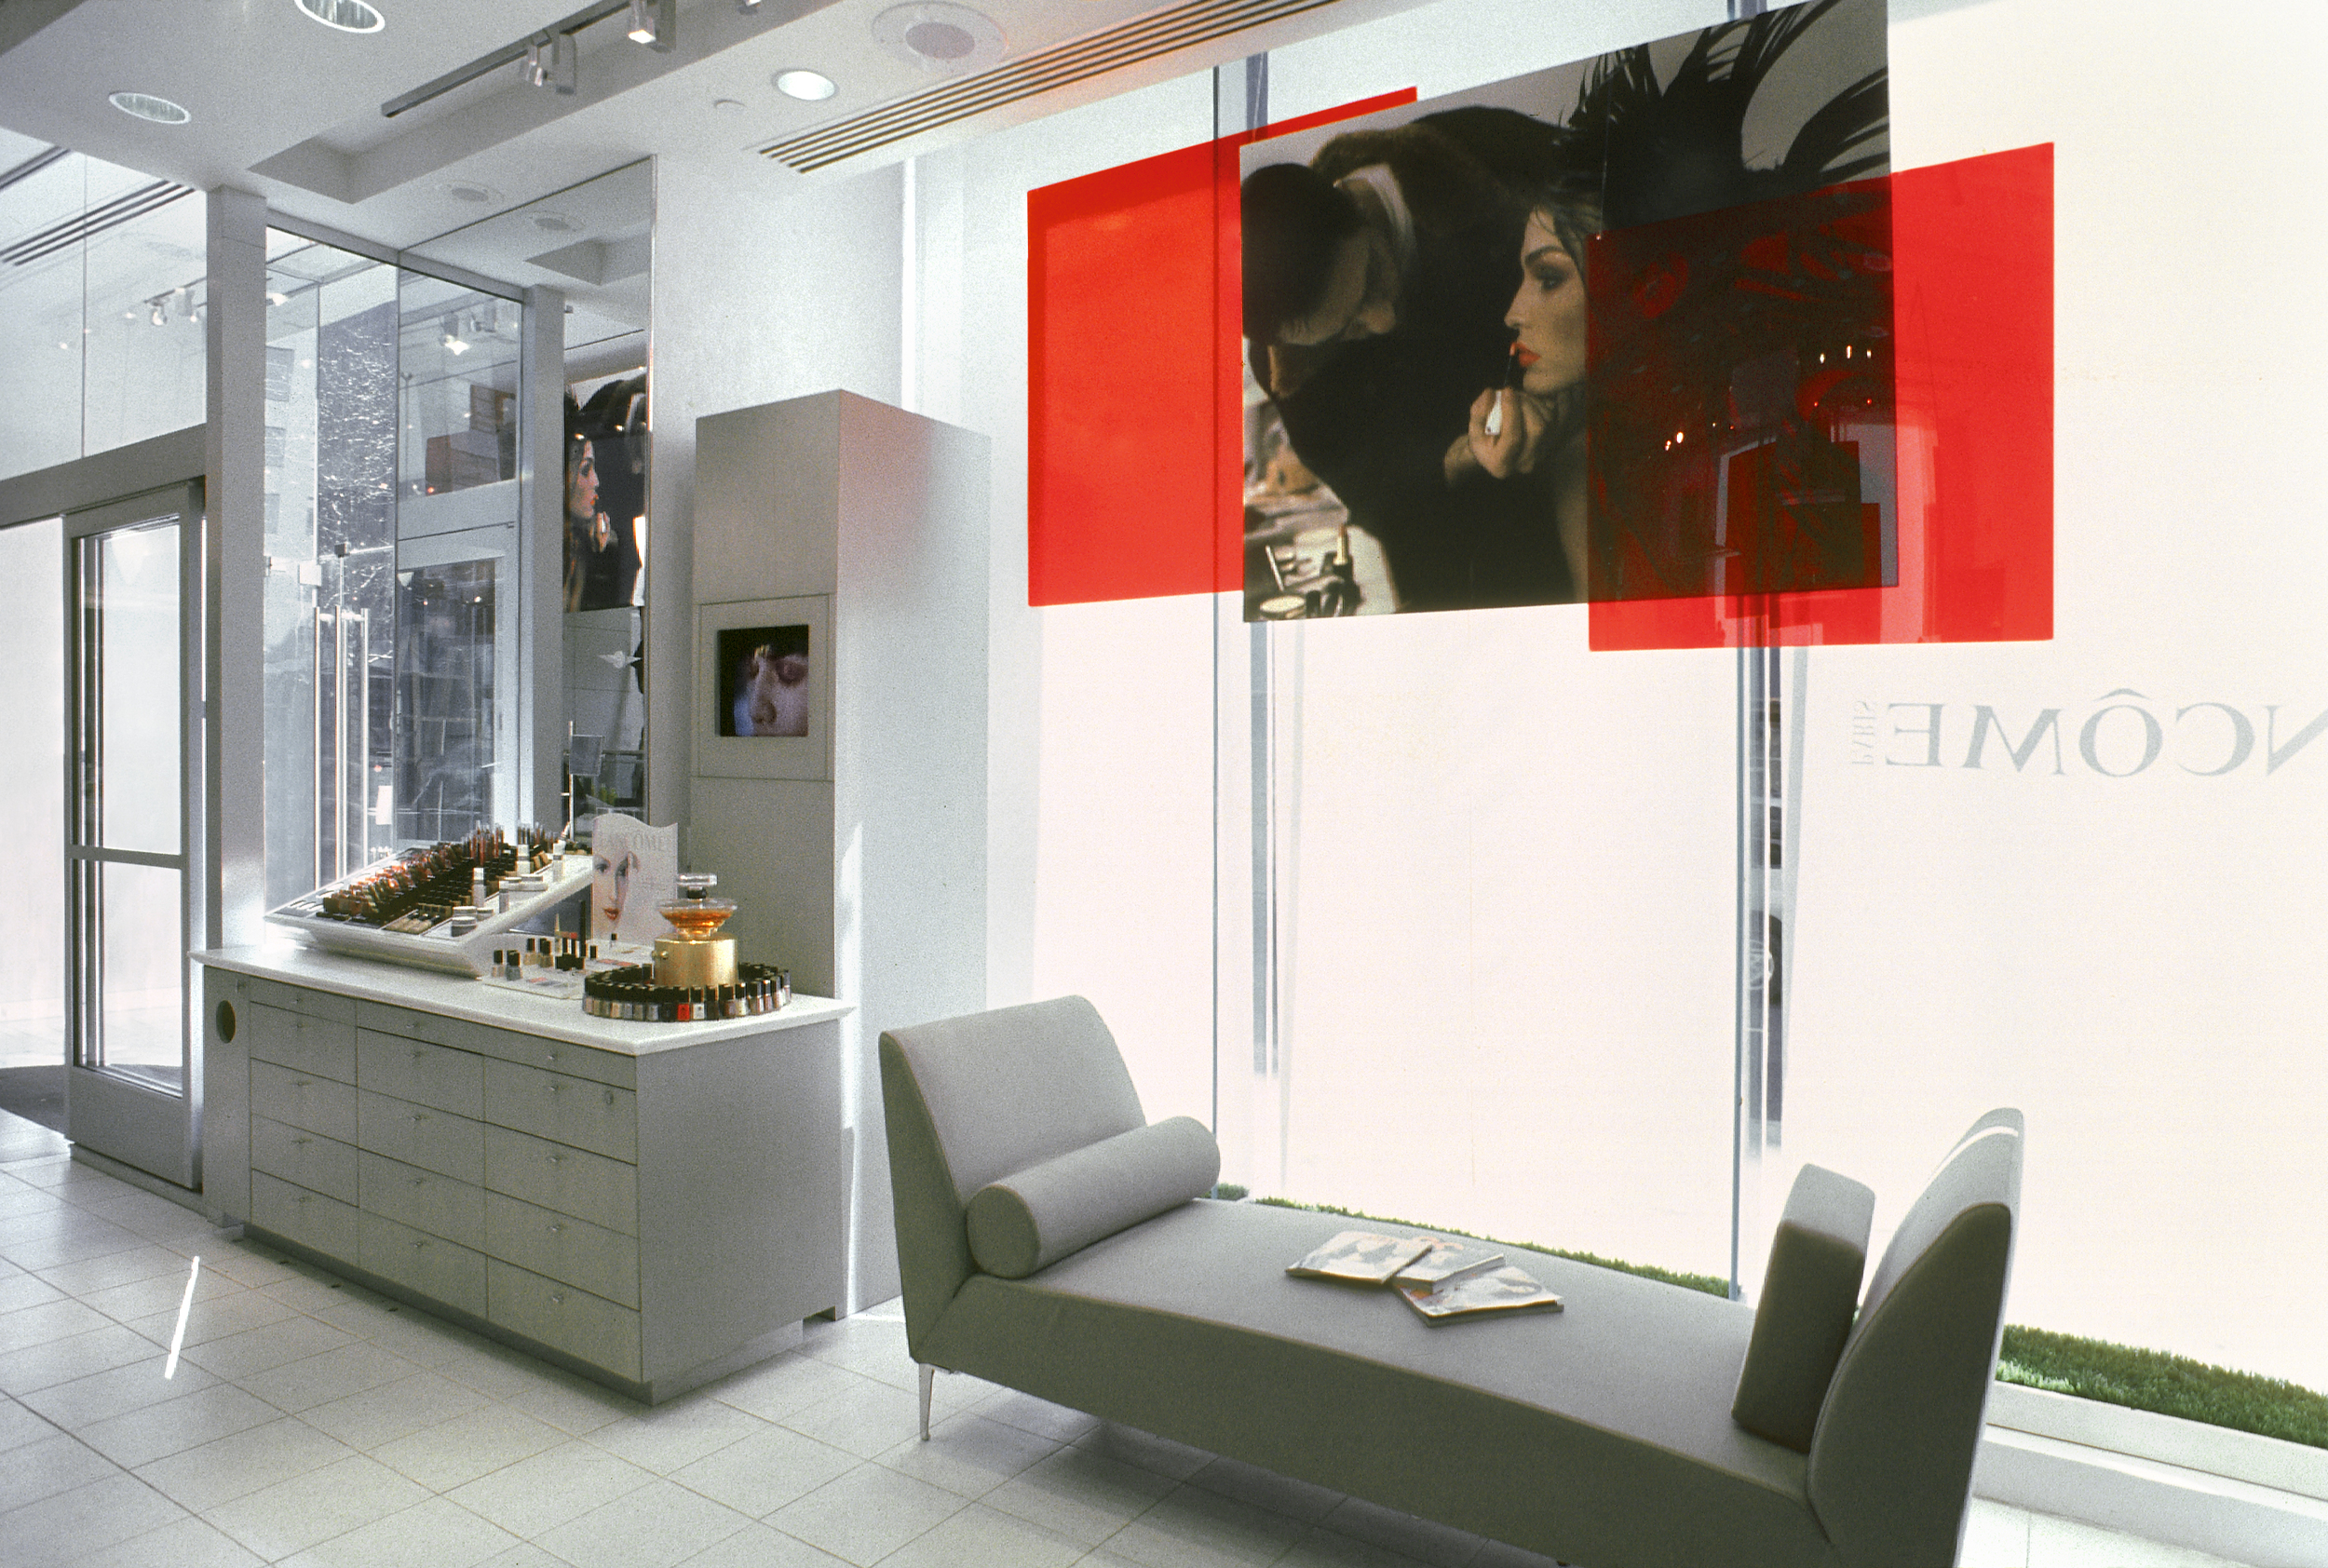 Lancome. Tobin Parnes Design. NY. Retail Design. Lounge Area.